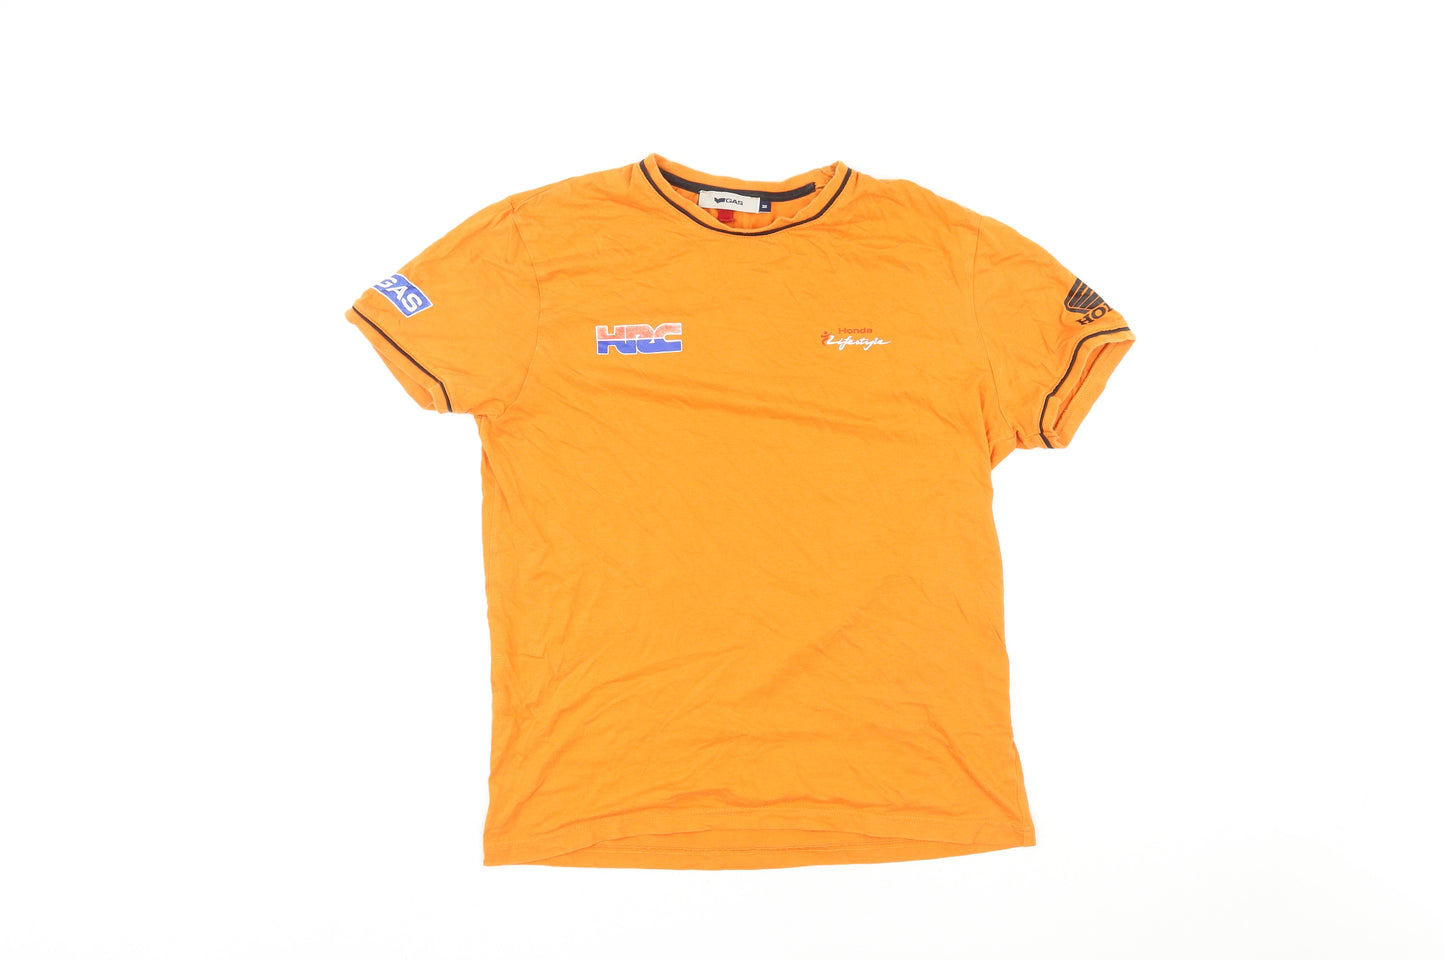 GAS Mens Orange Cotton T-Shirt Size M Crew Neck - Honda Racing